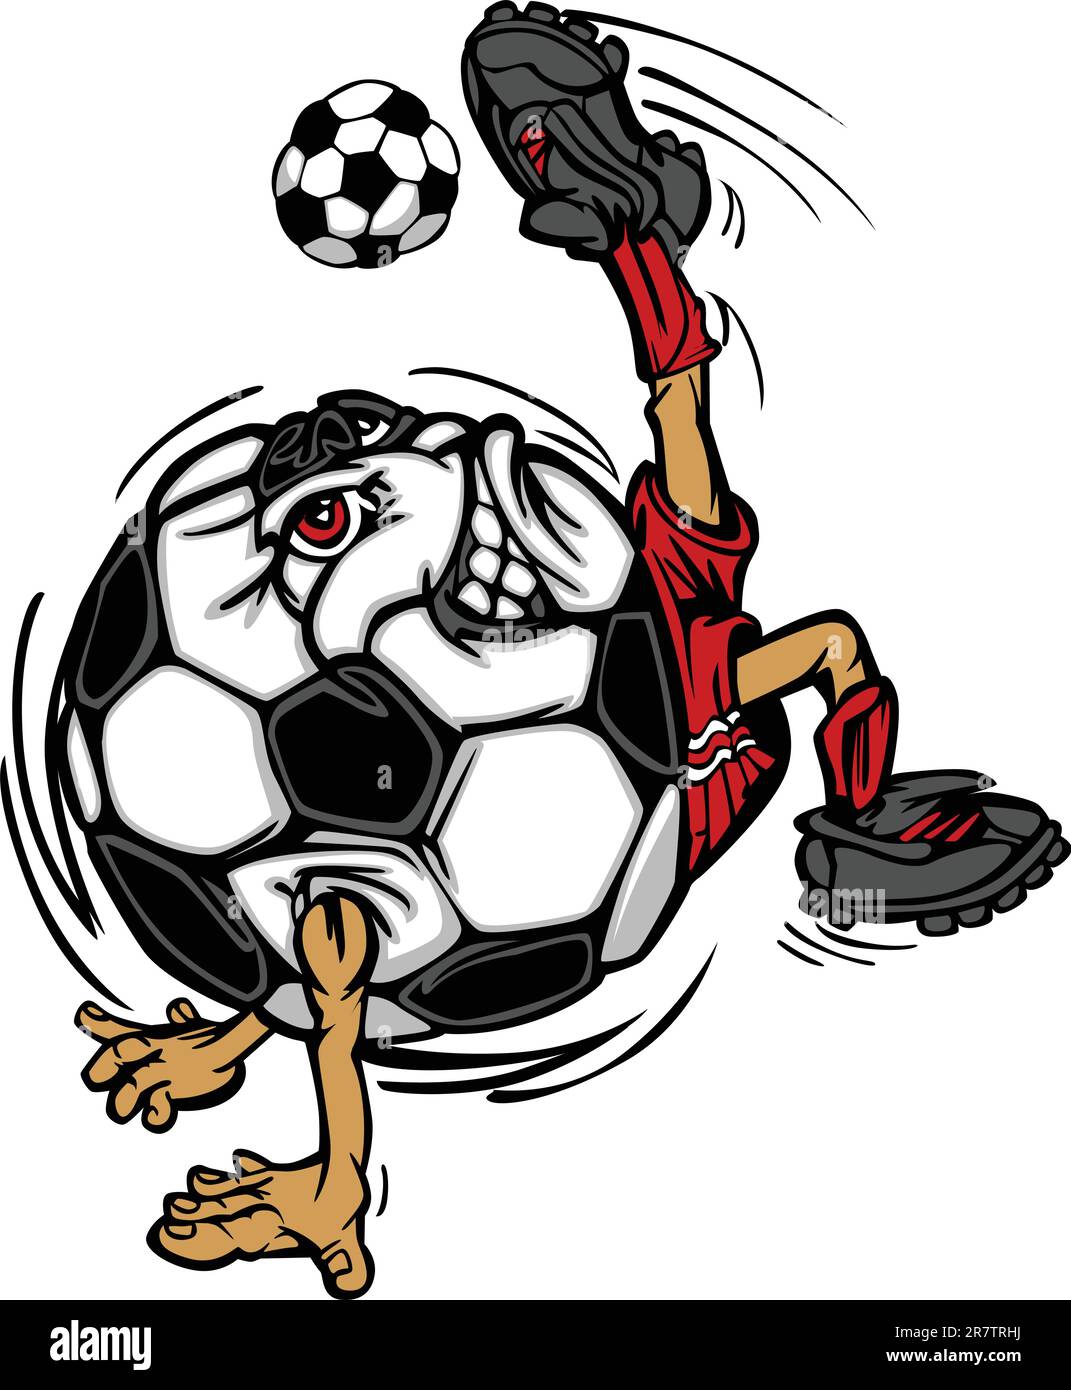 Soccer Ball Cartoon Image as a Soccer Player Kicking Soccer Ball Stock Vector